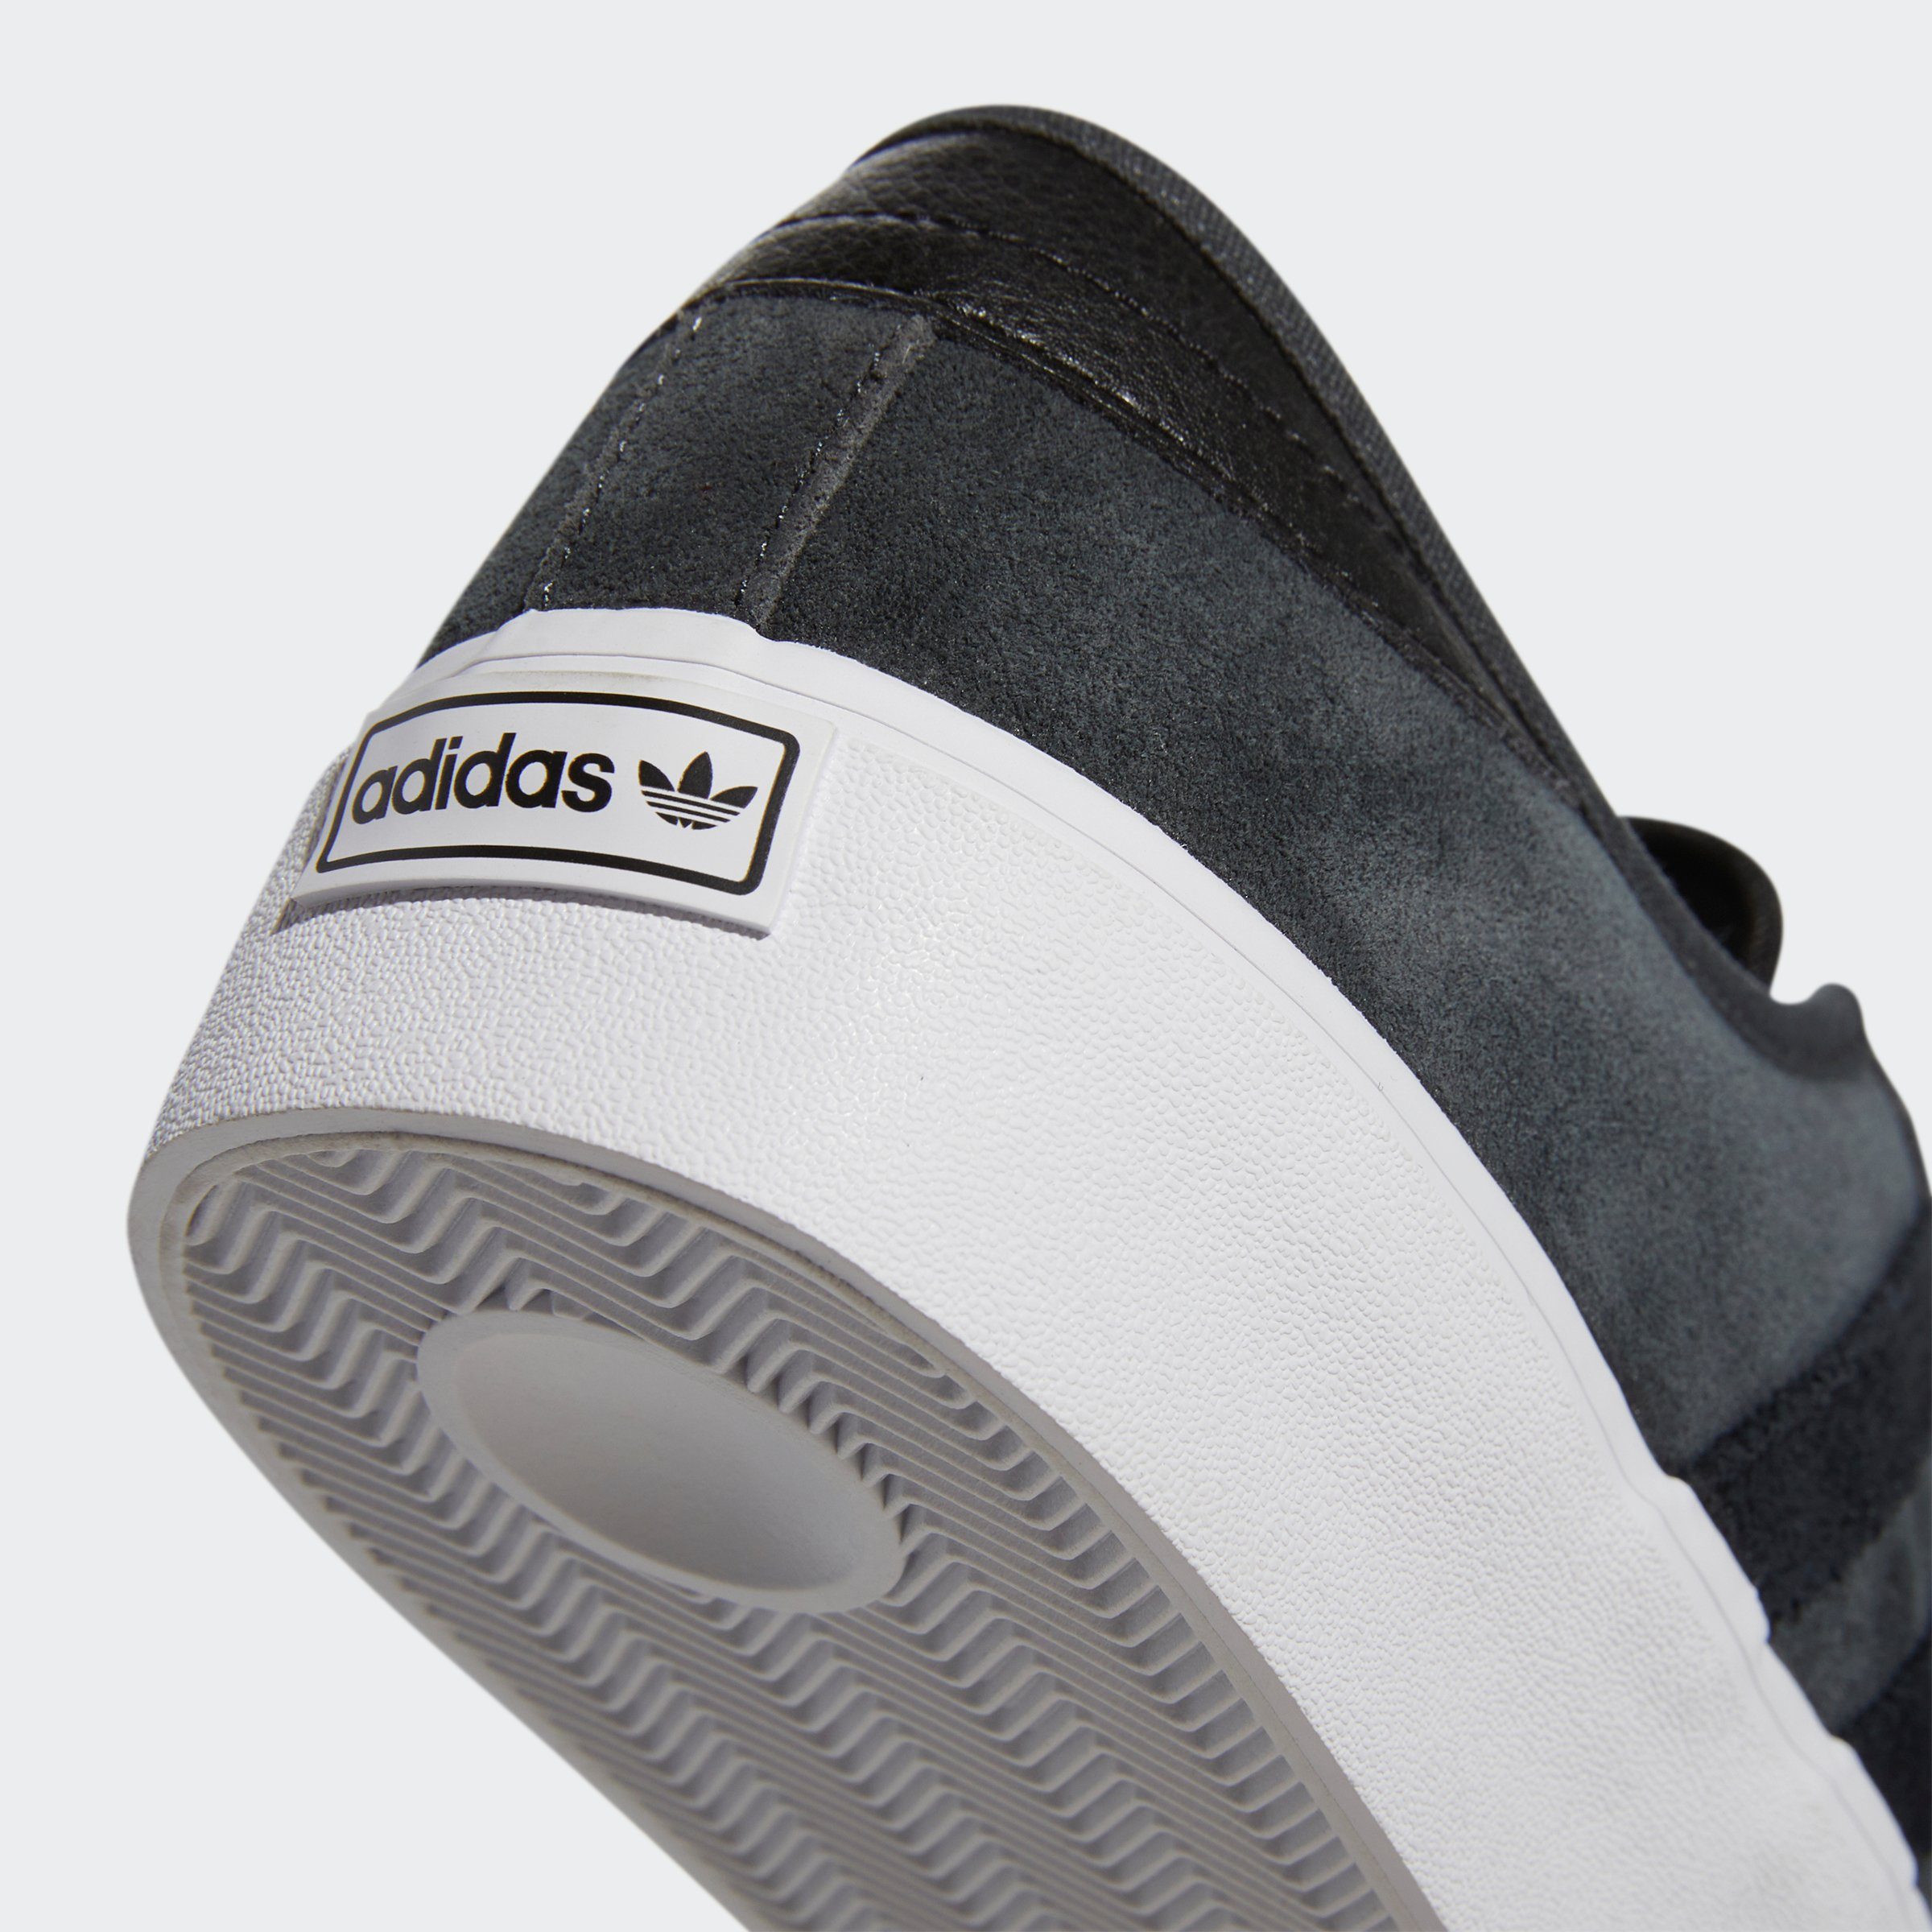 SEELEY Originals XT adidas Sneaker